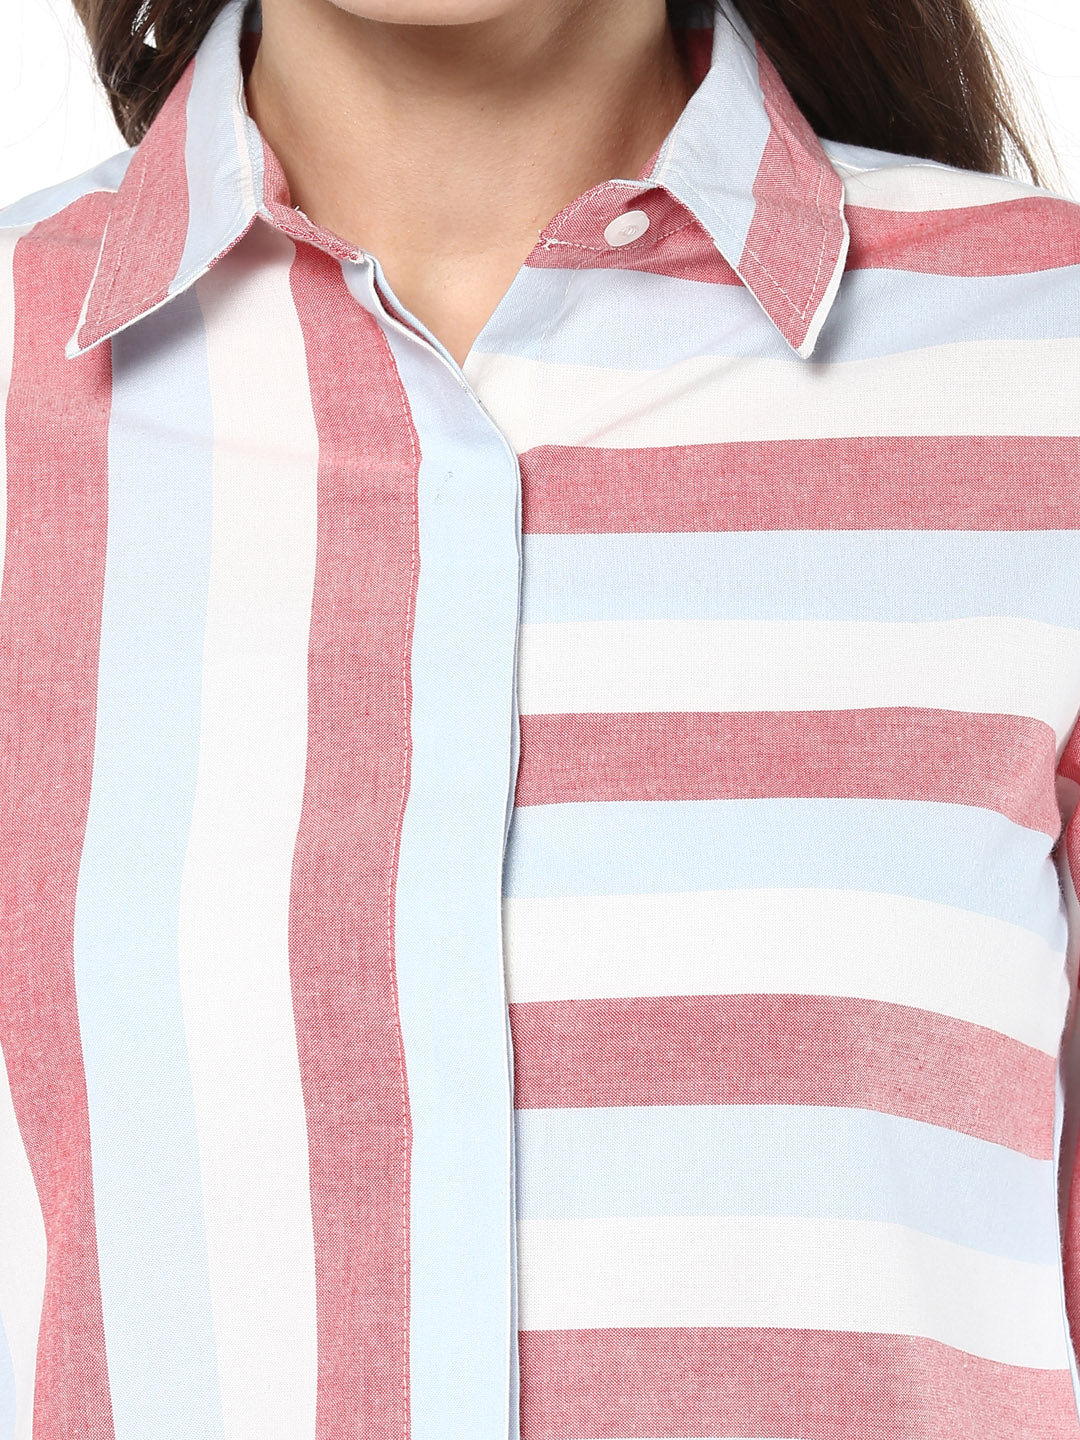 Women's Cotton Horizontal and Vertical Striped Shirt - StyleStone